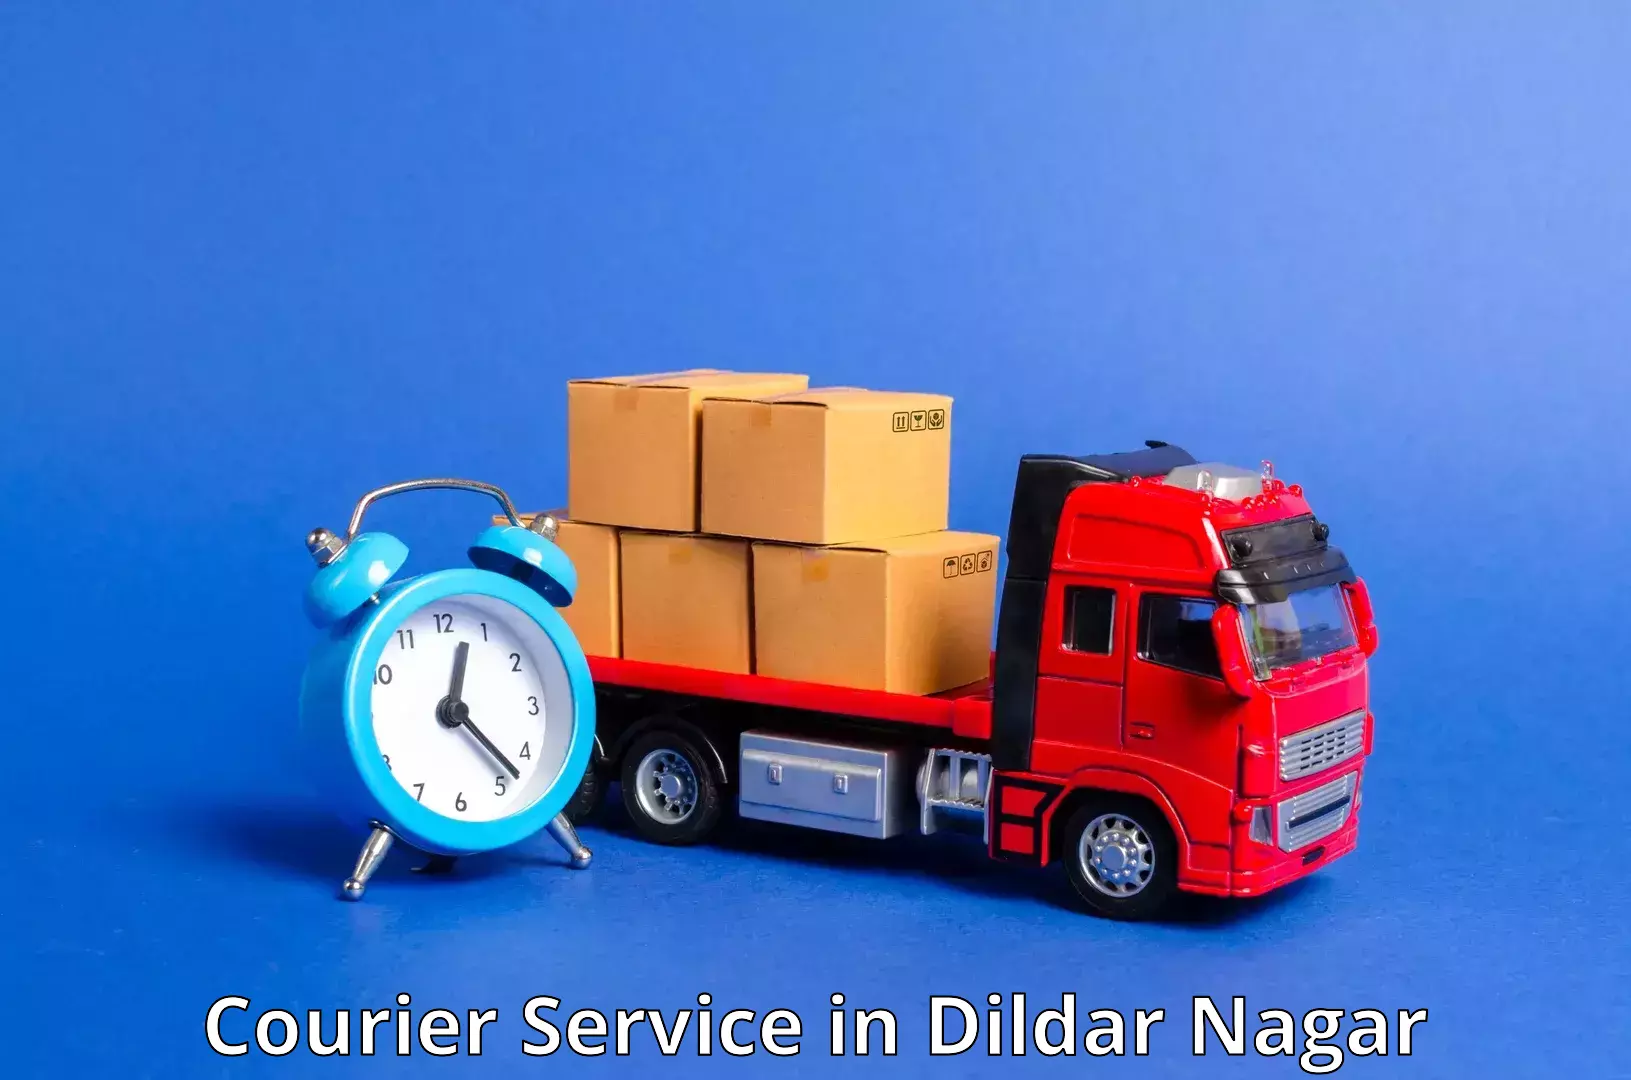 Affordable logistics services in Dildar Nagar